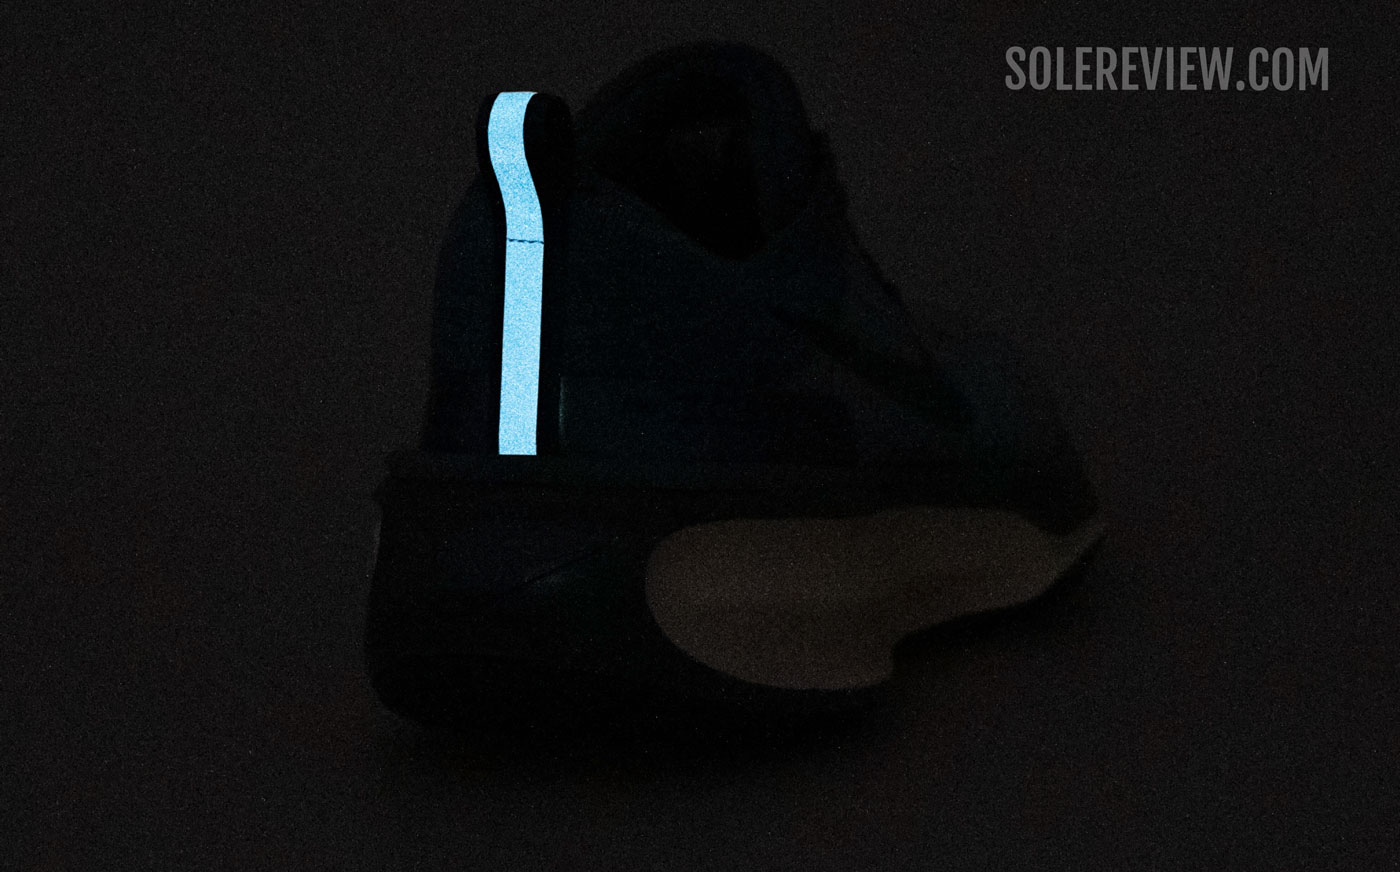 The reflective heel of the Nike Invincible Run 3.